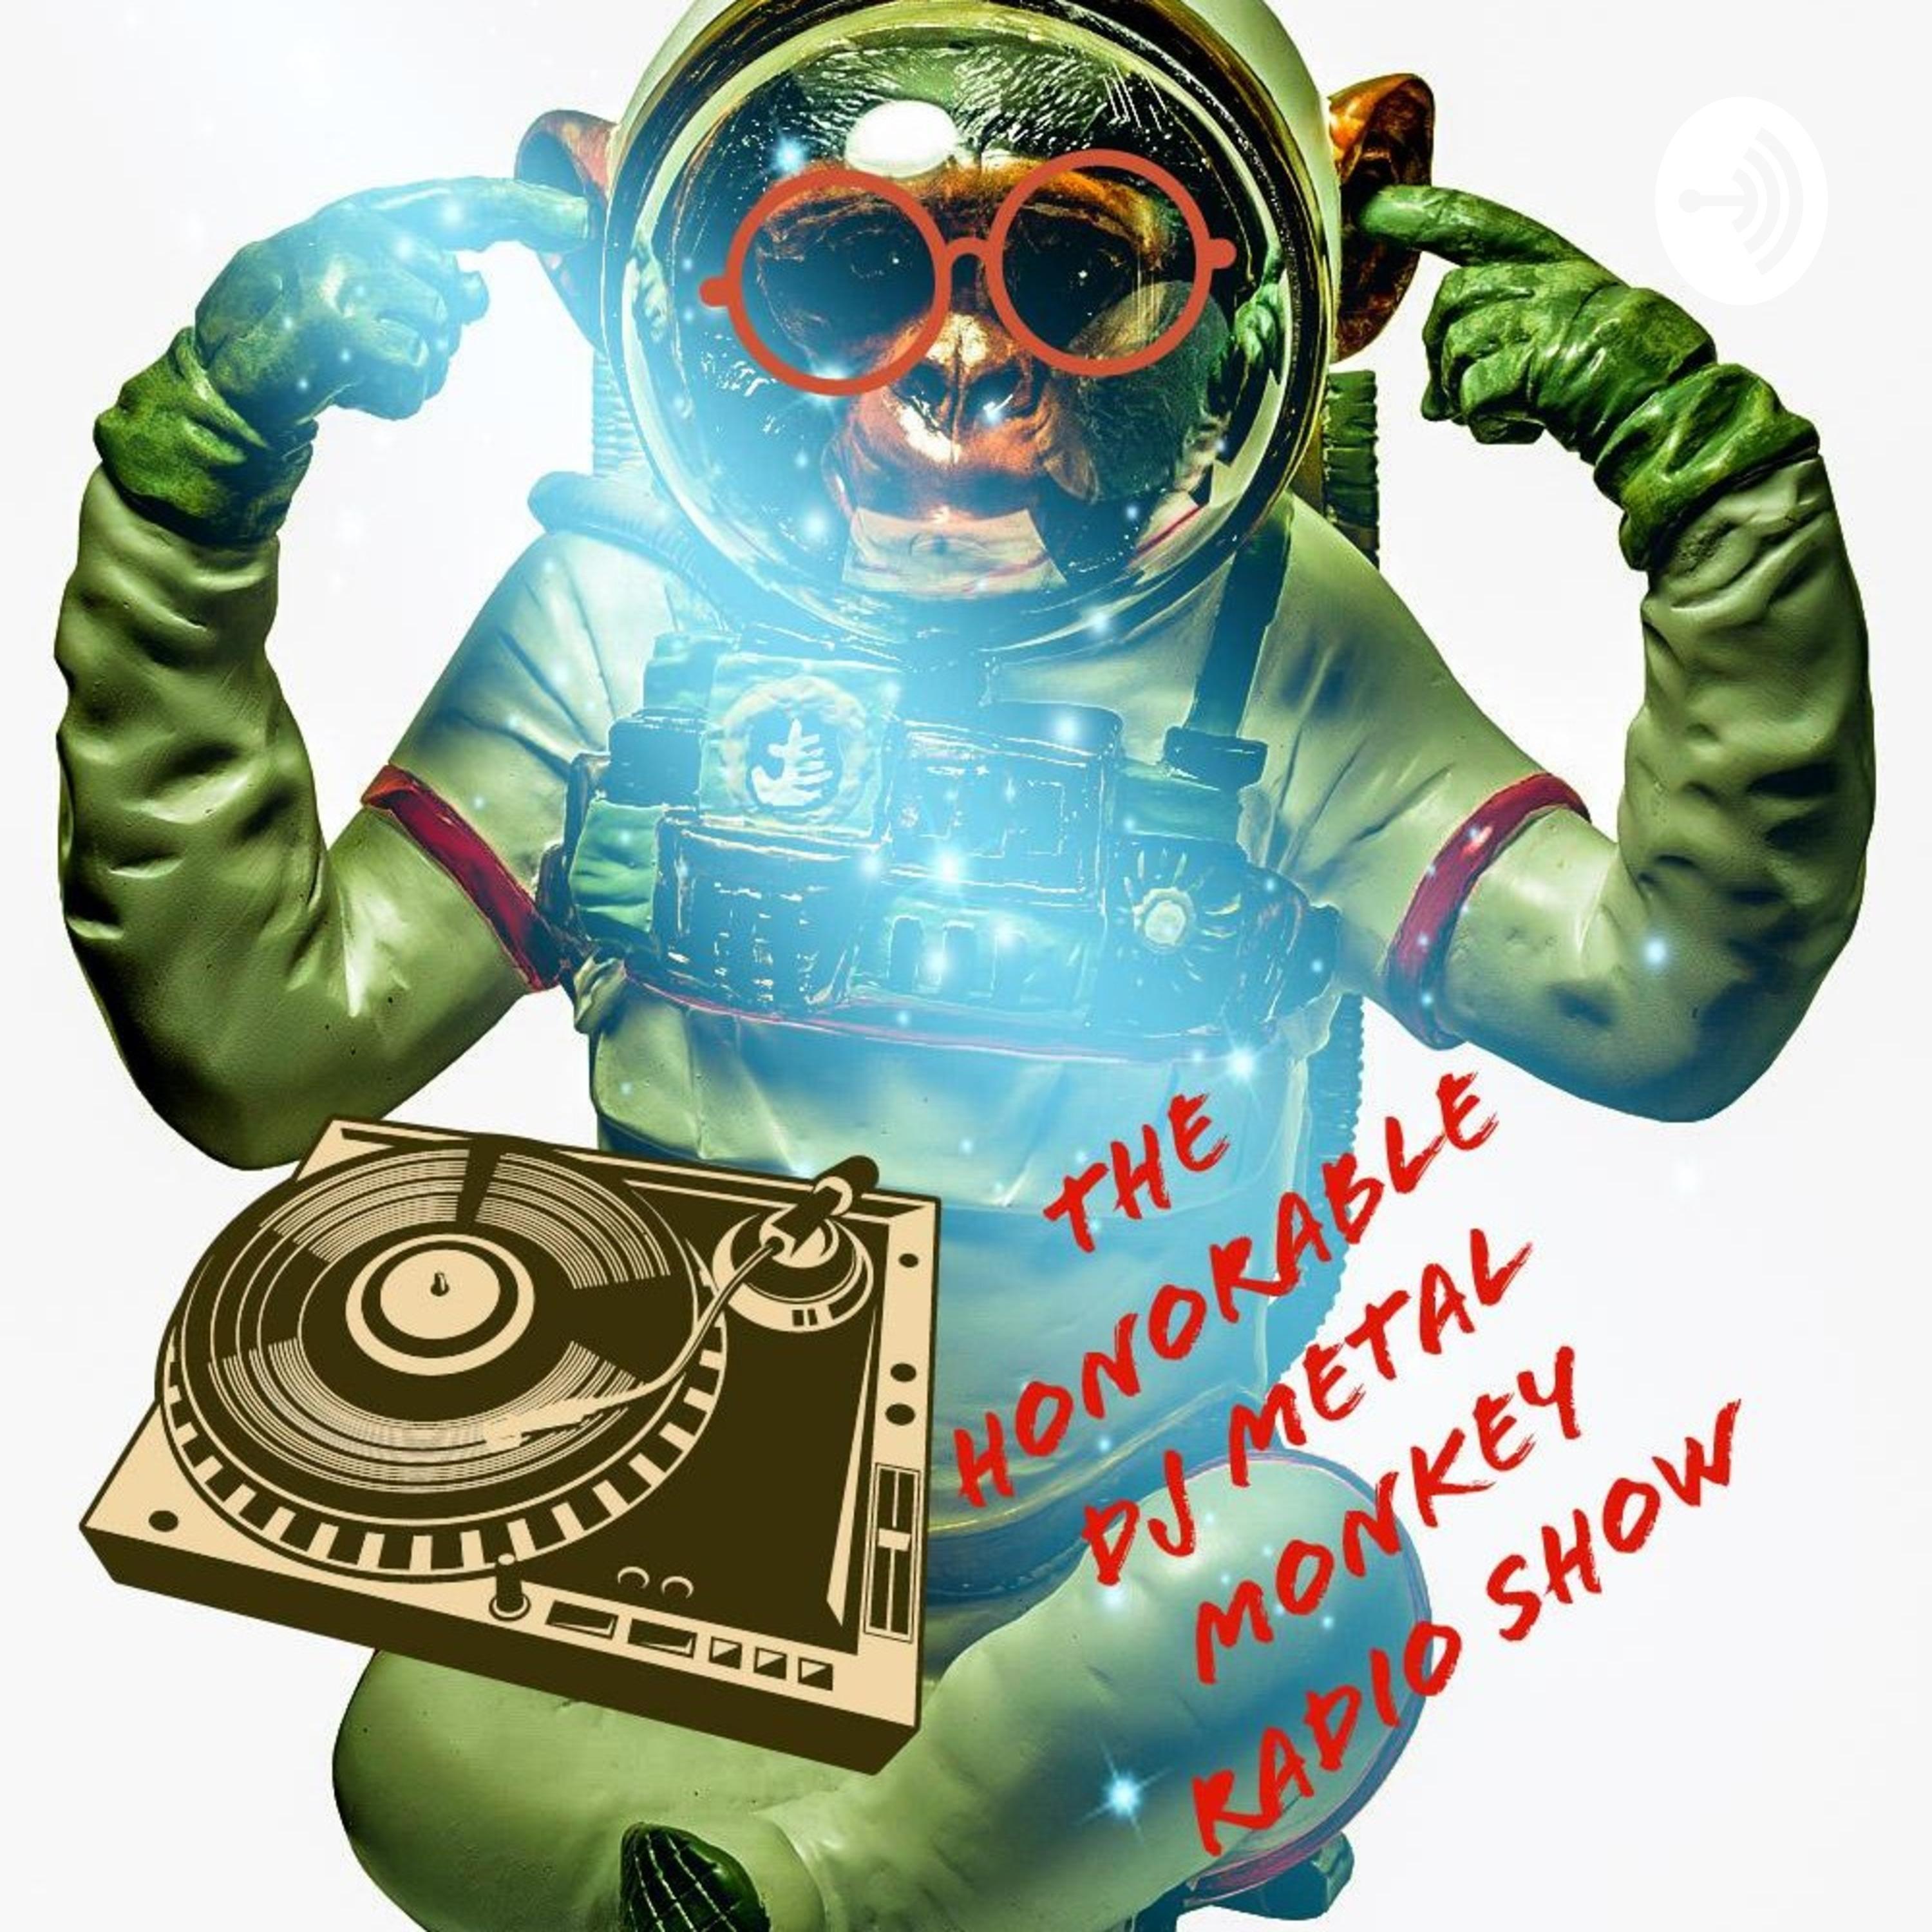 The Honorable DJ Metal Monkey Radio Show